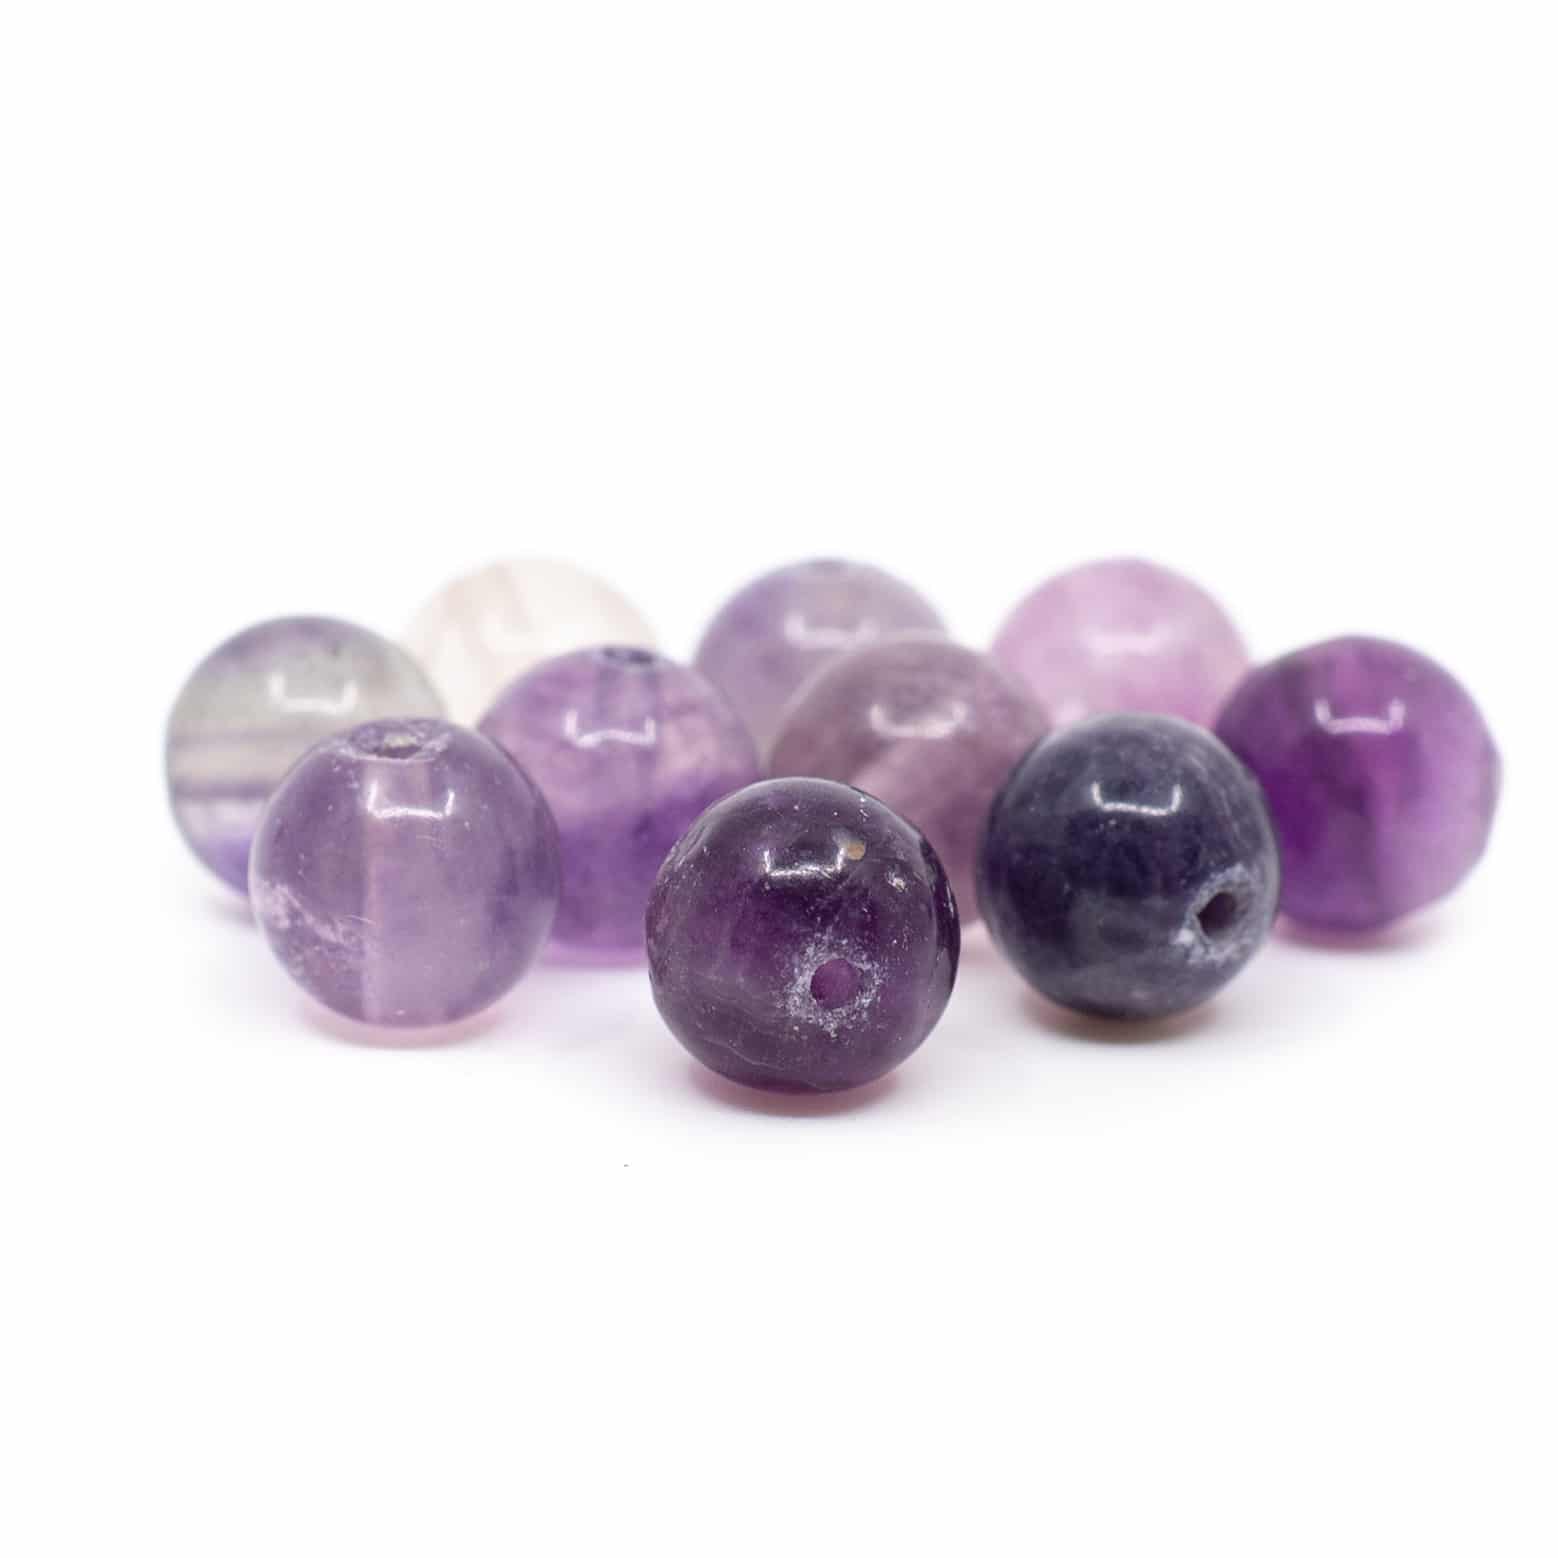 Gemstone Loose Beads Fluorite - 10 pieces (8 mm)